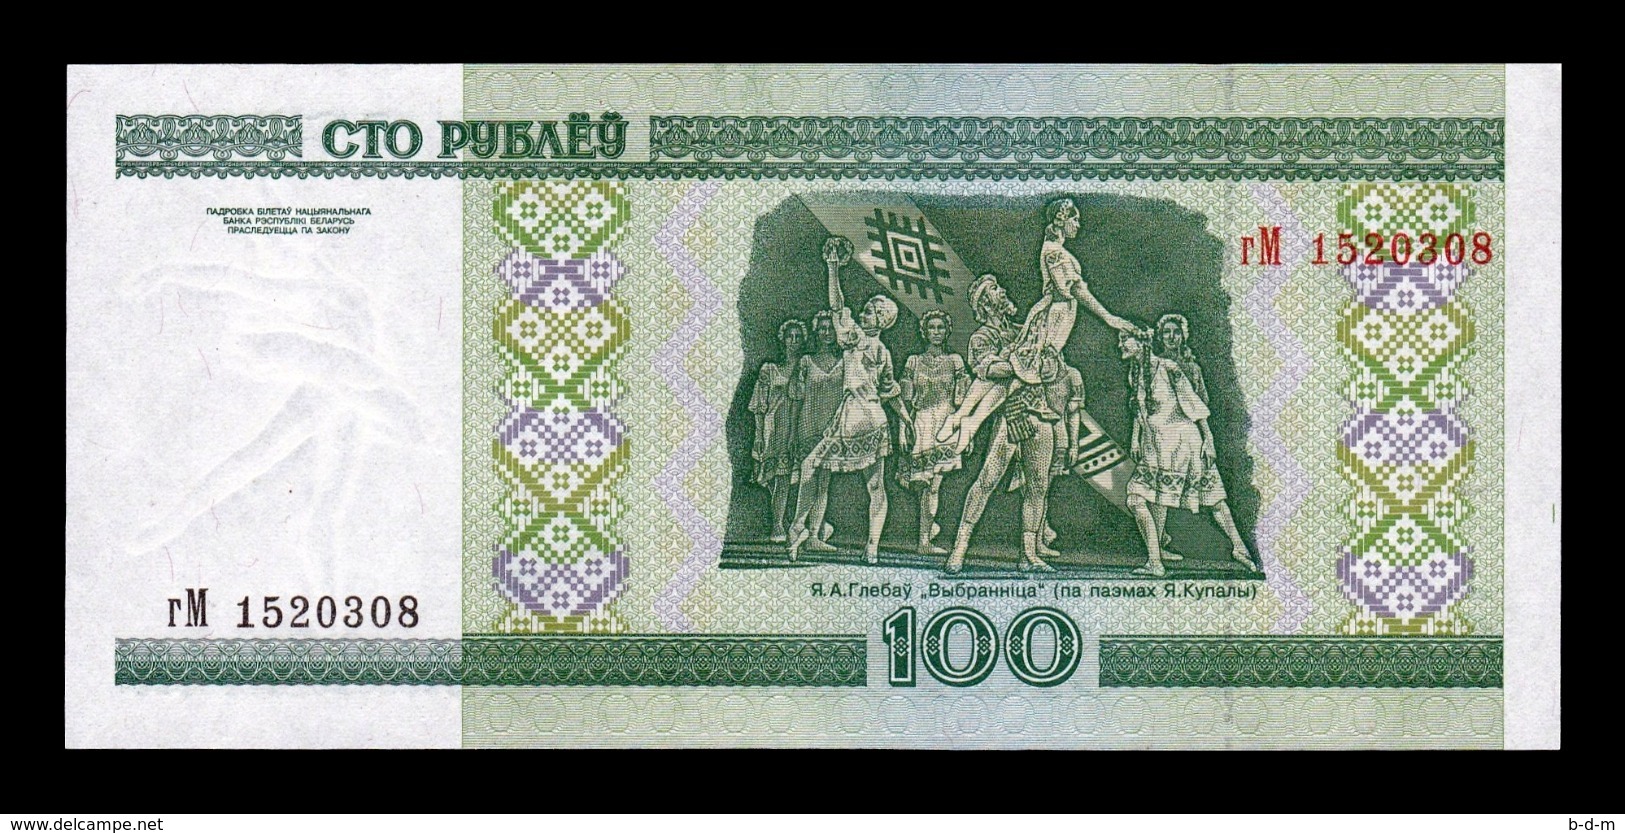 Bielorrusia Belarus Lot Bundle 10 Banknotes 100 Rublos 2000 Pick 26a With Security Thread SC UNC - Belarus